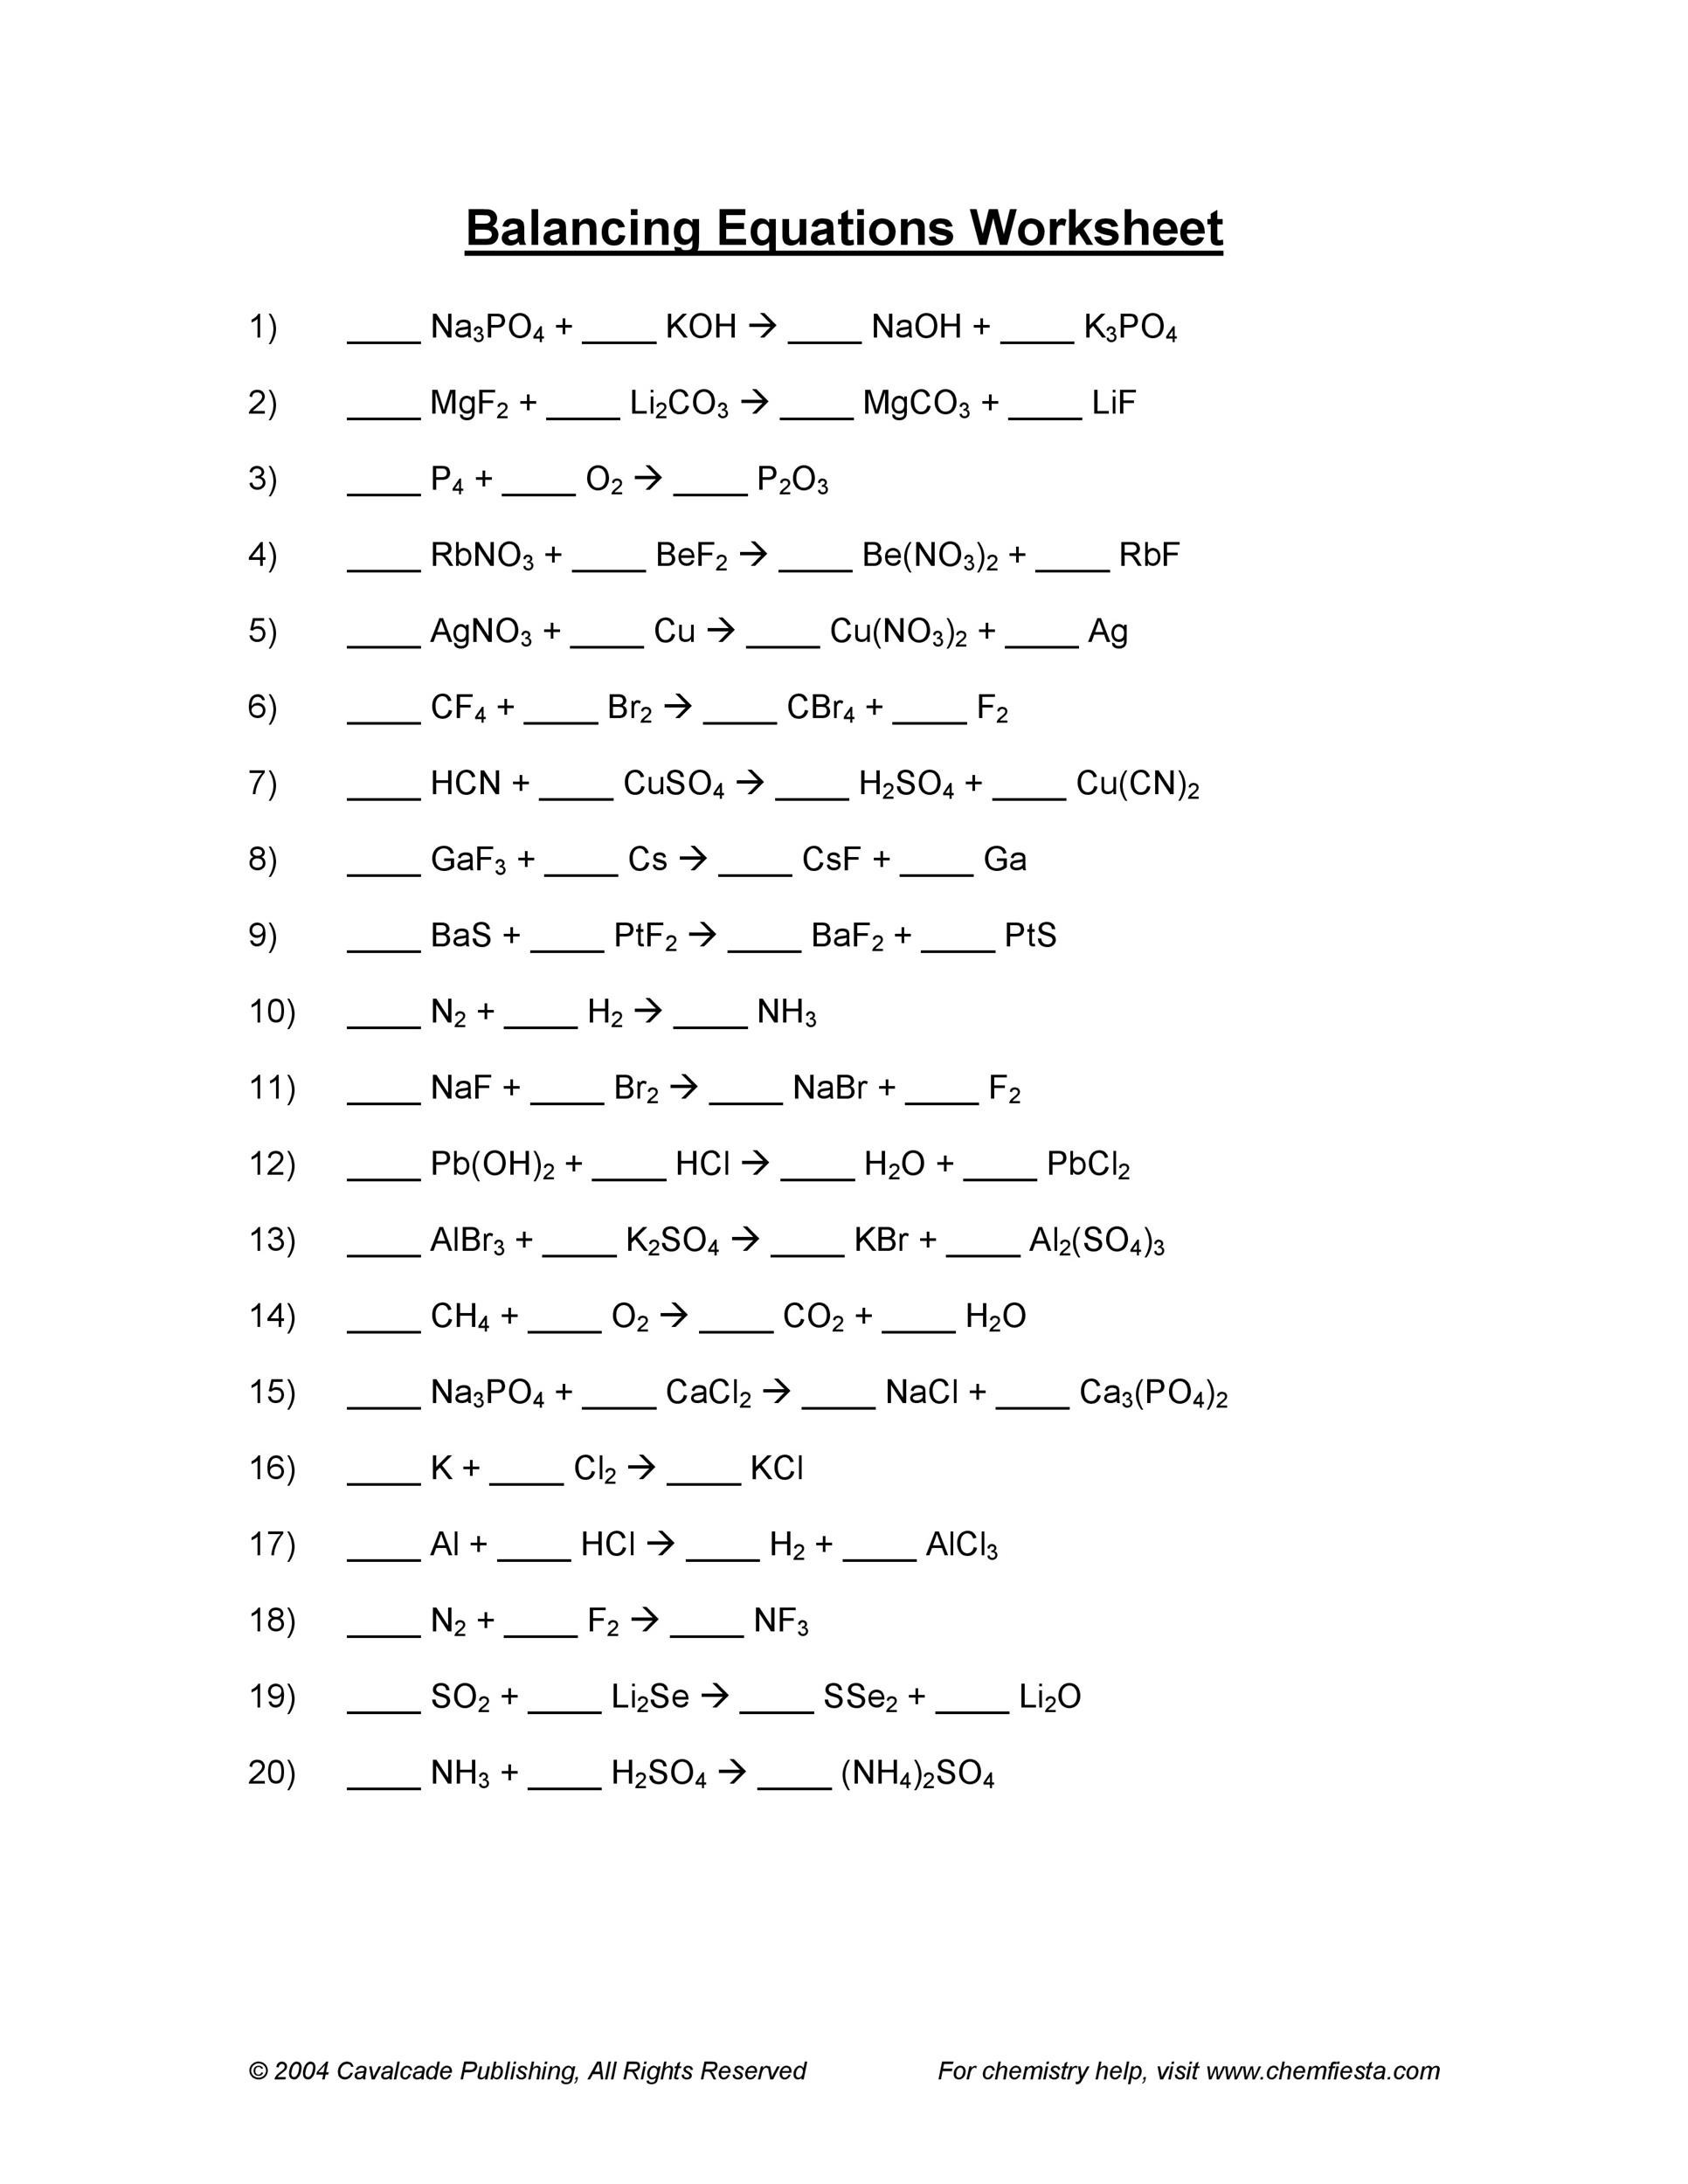 Chem 130 Balancing Equations Worksheet